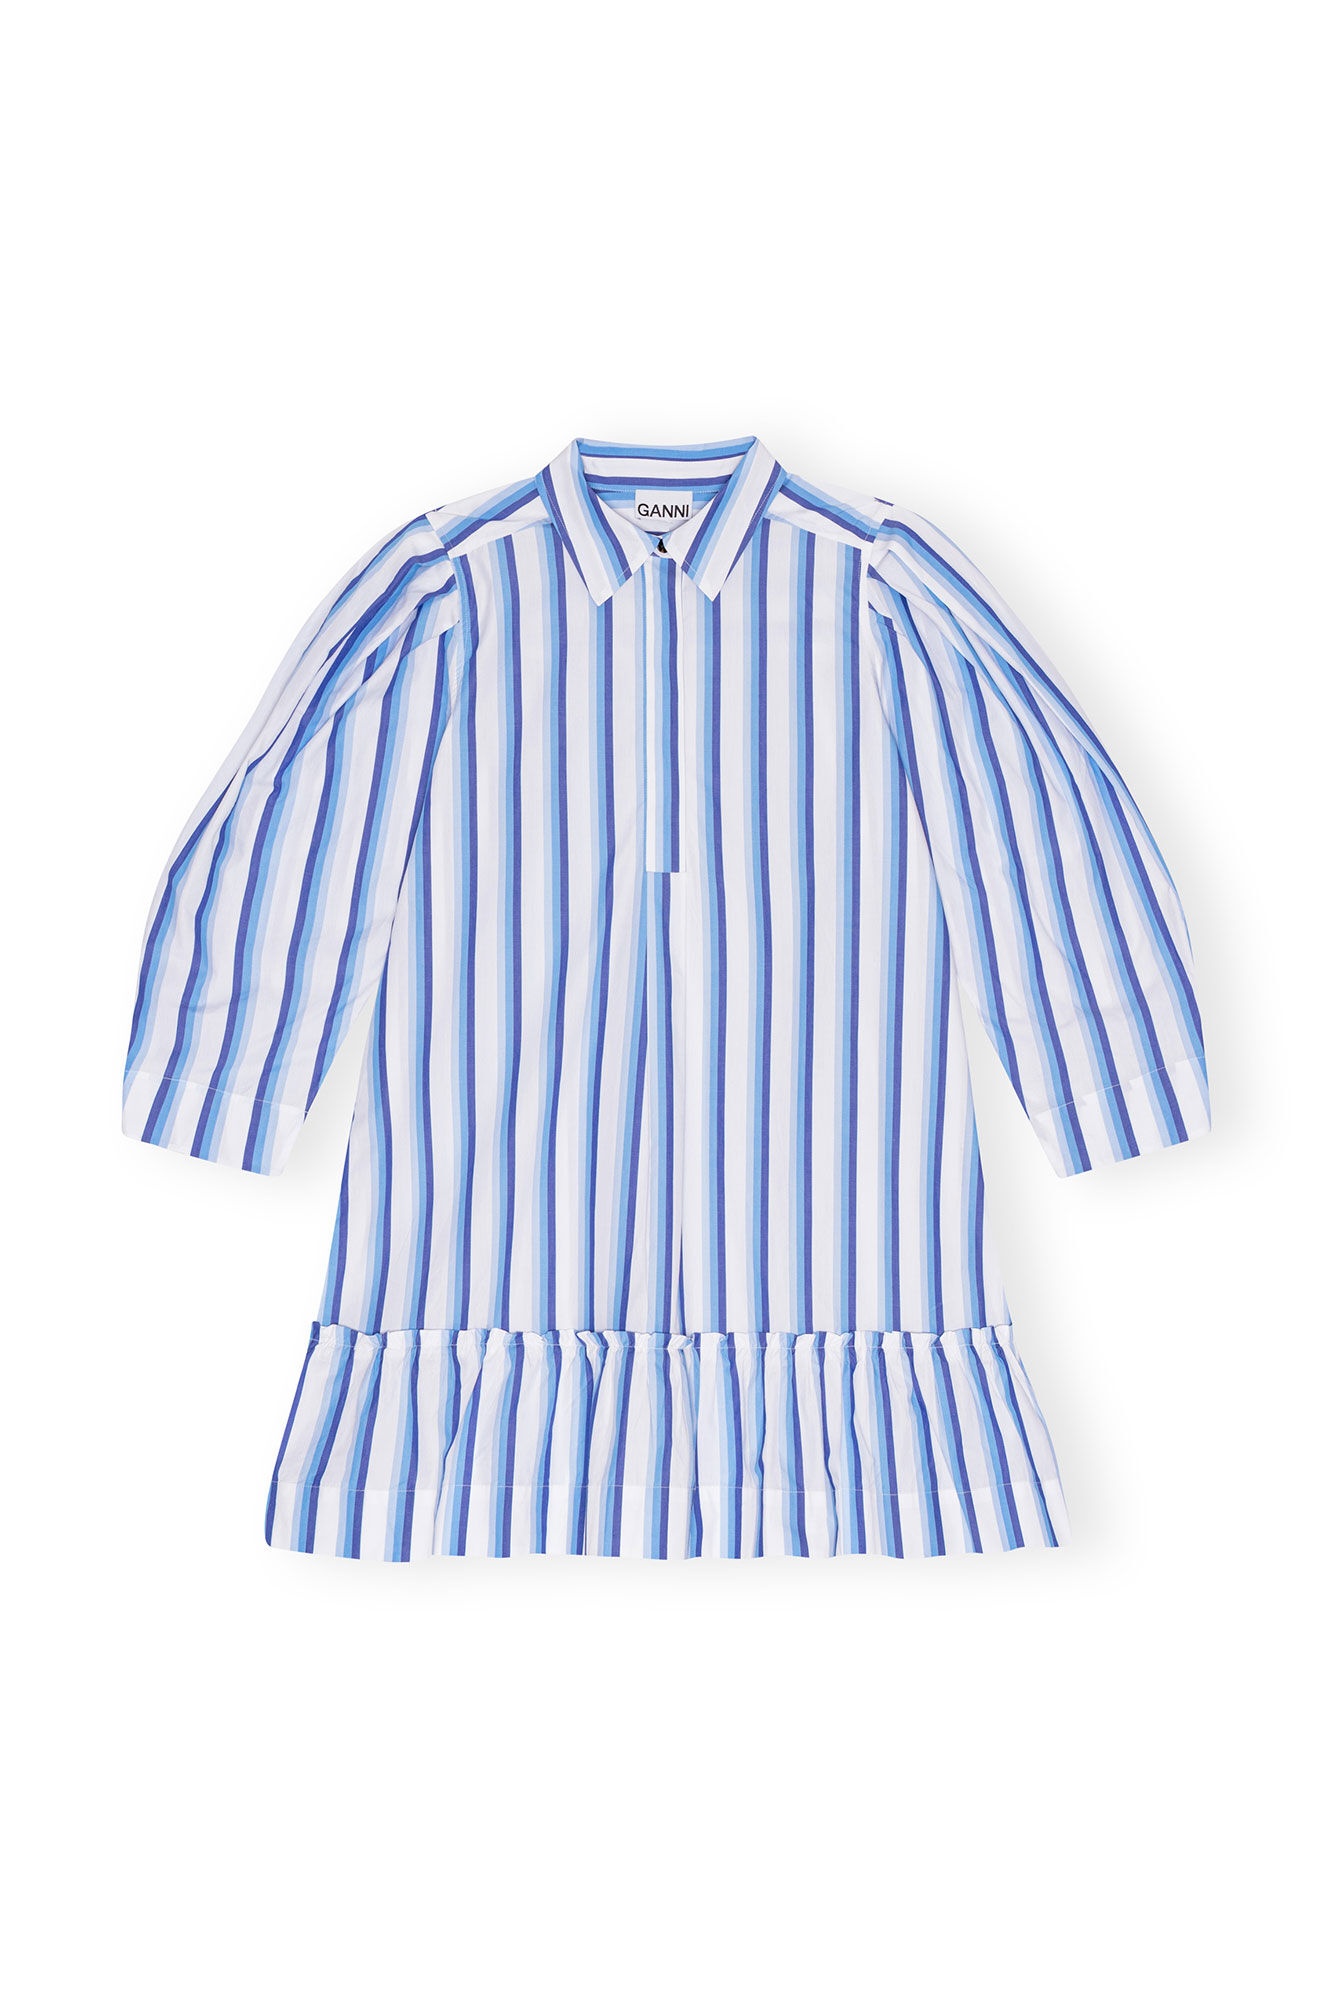 BLUE STRIPED COTTON MINI SHIRT DRESS - 1